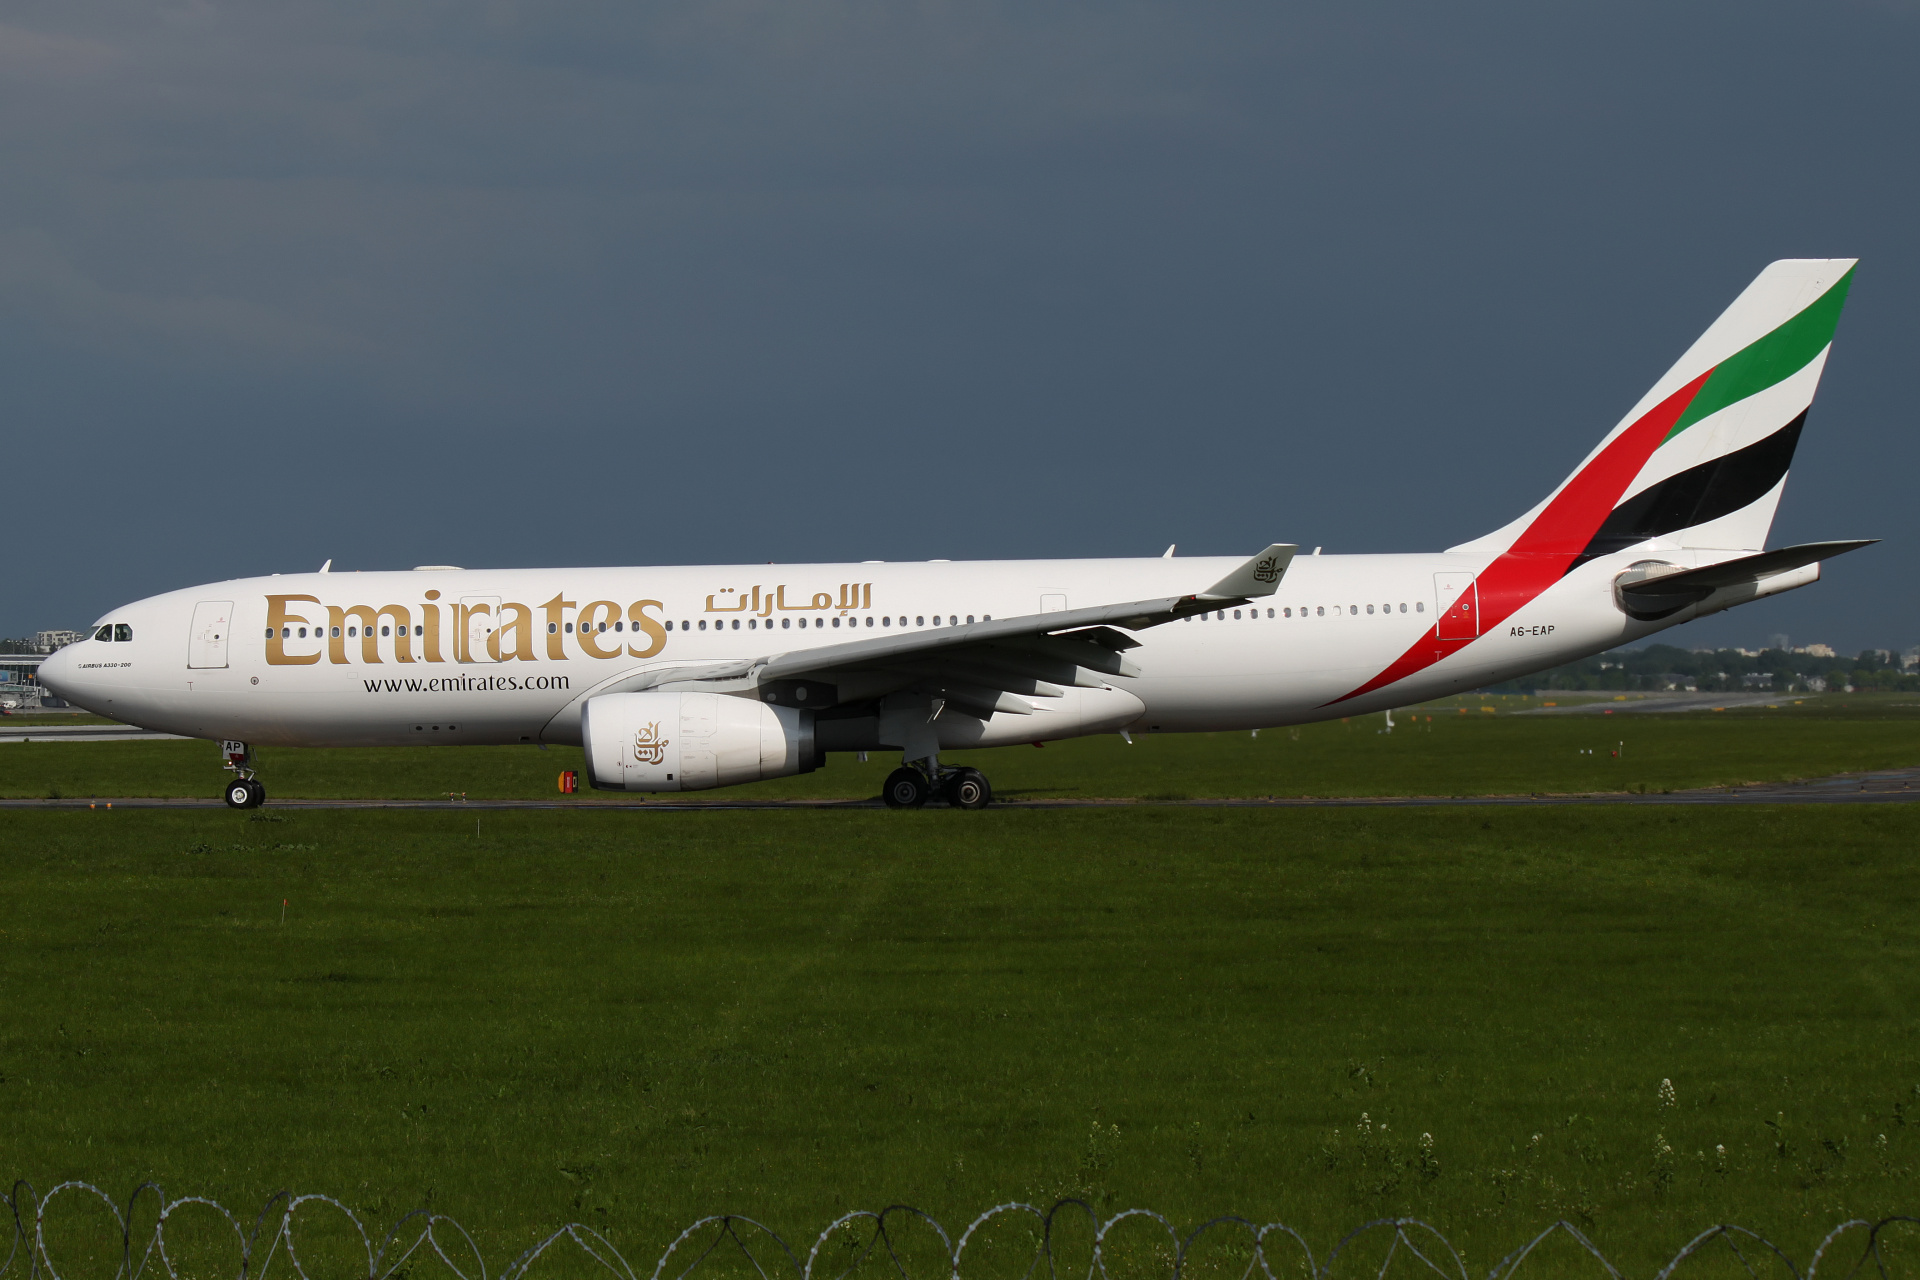 A6-EAP (Aircraft » EPWA Spotting » Airbus A330-200 » Emirates)